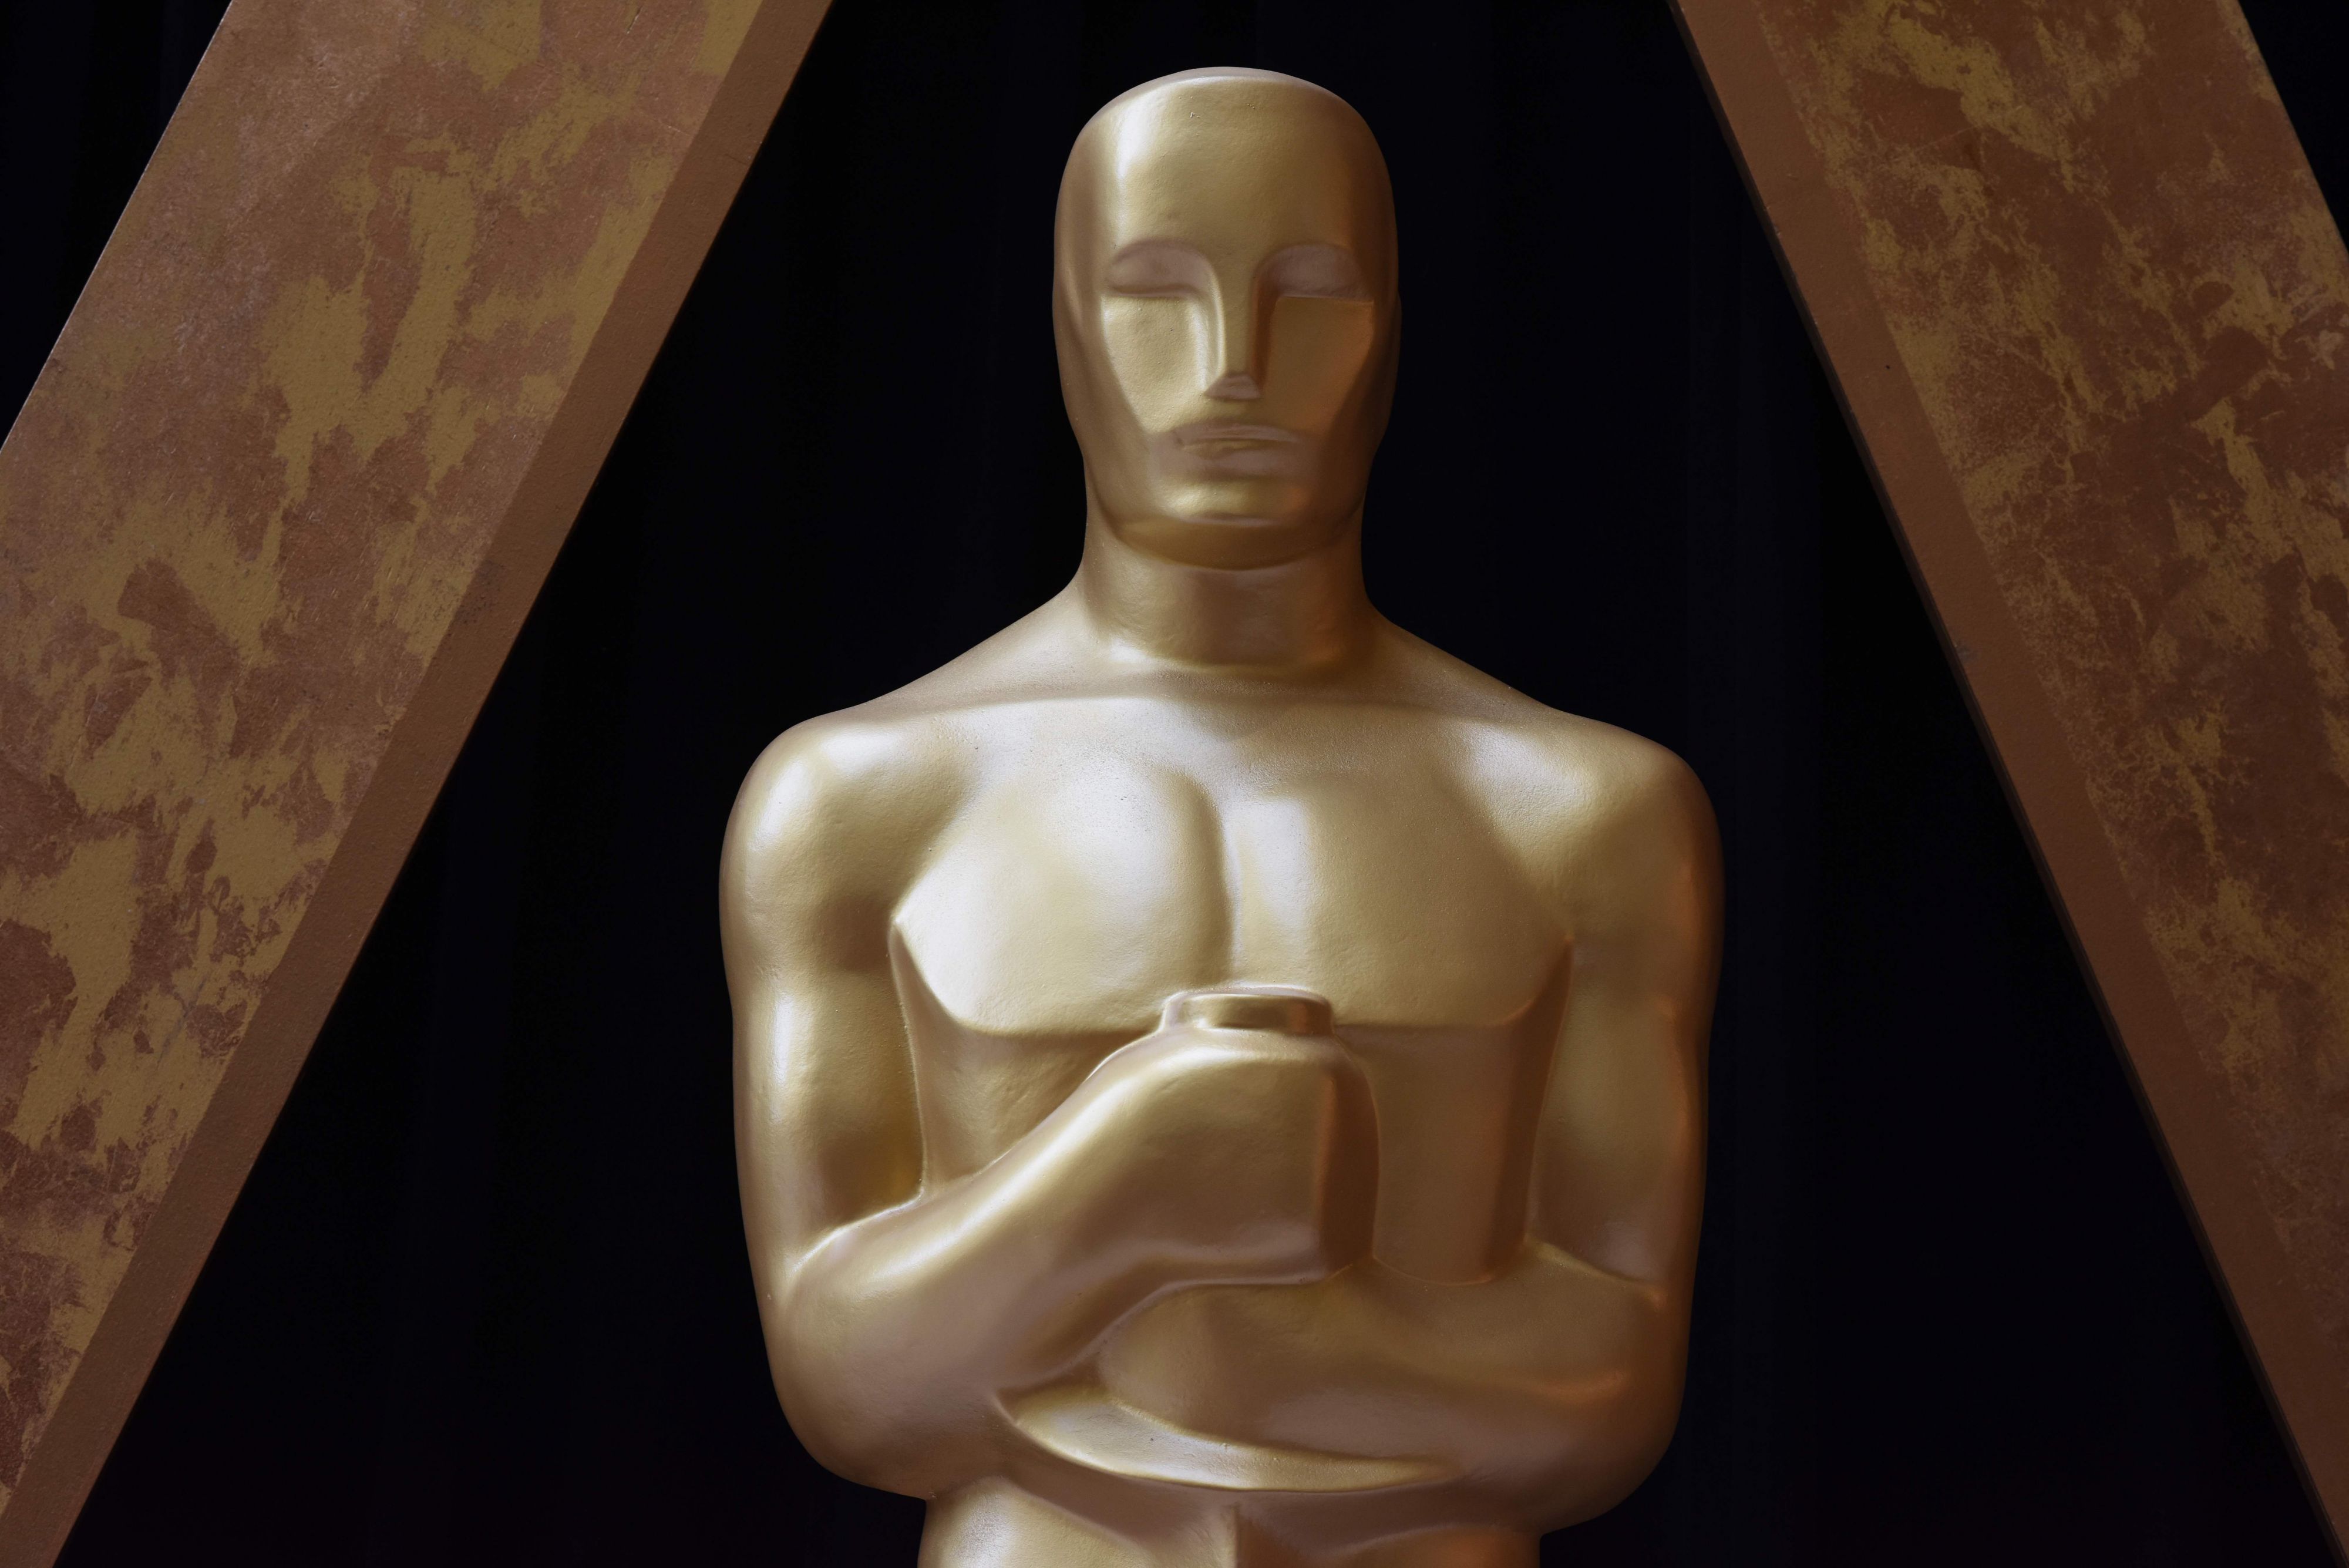 Uitreiking Oscars: welke films maken kans? 